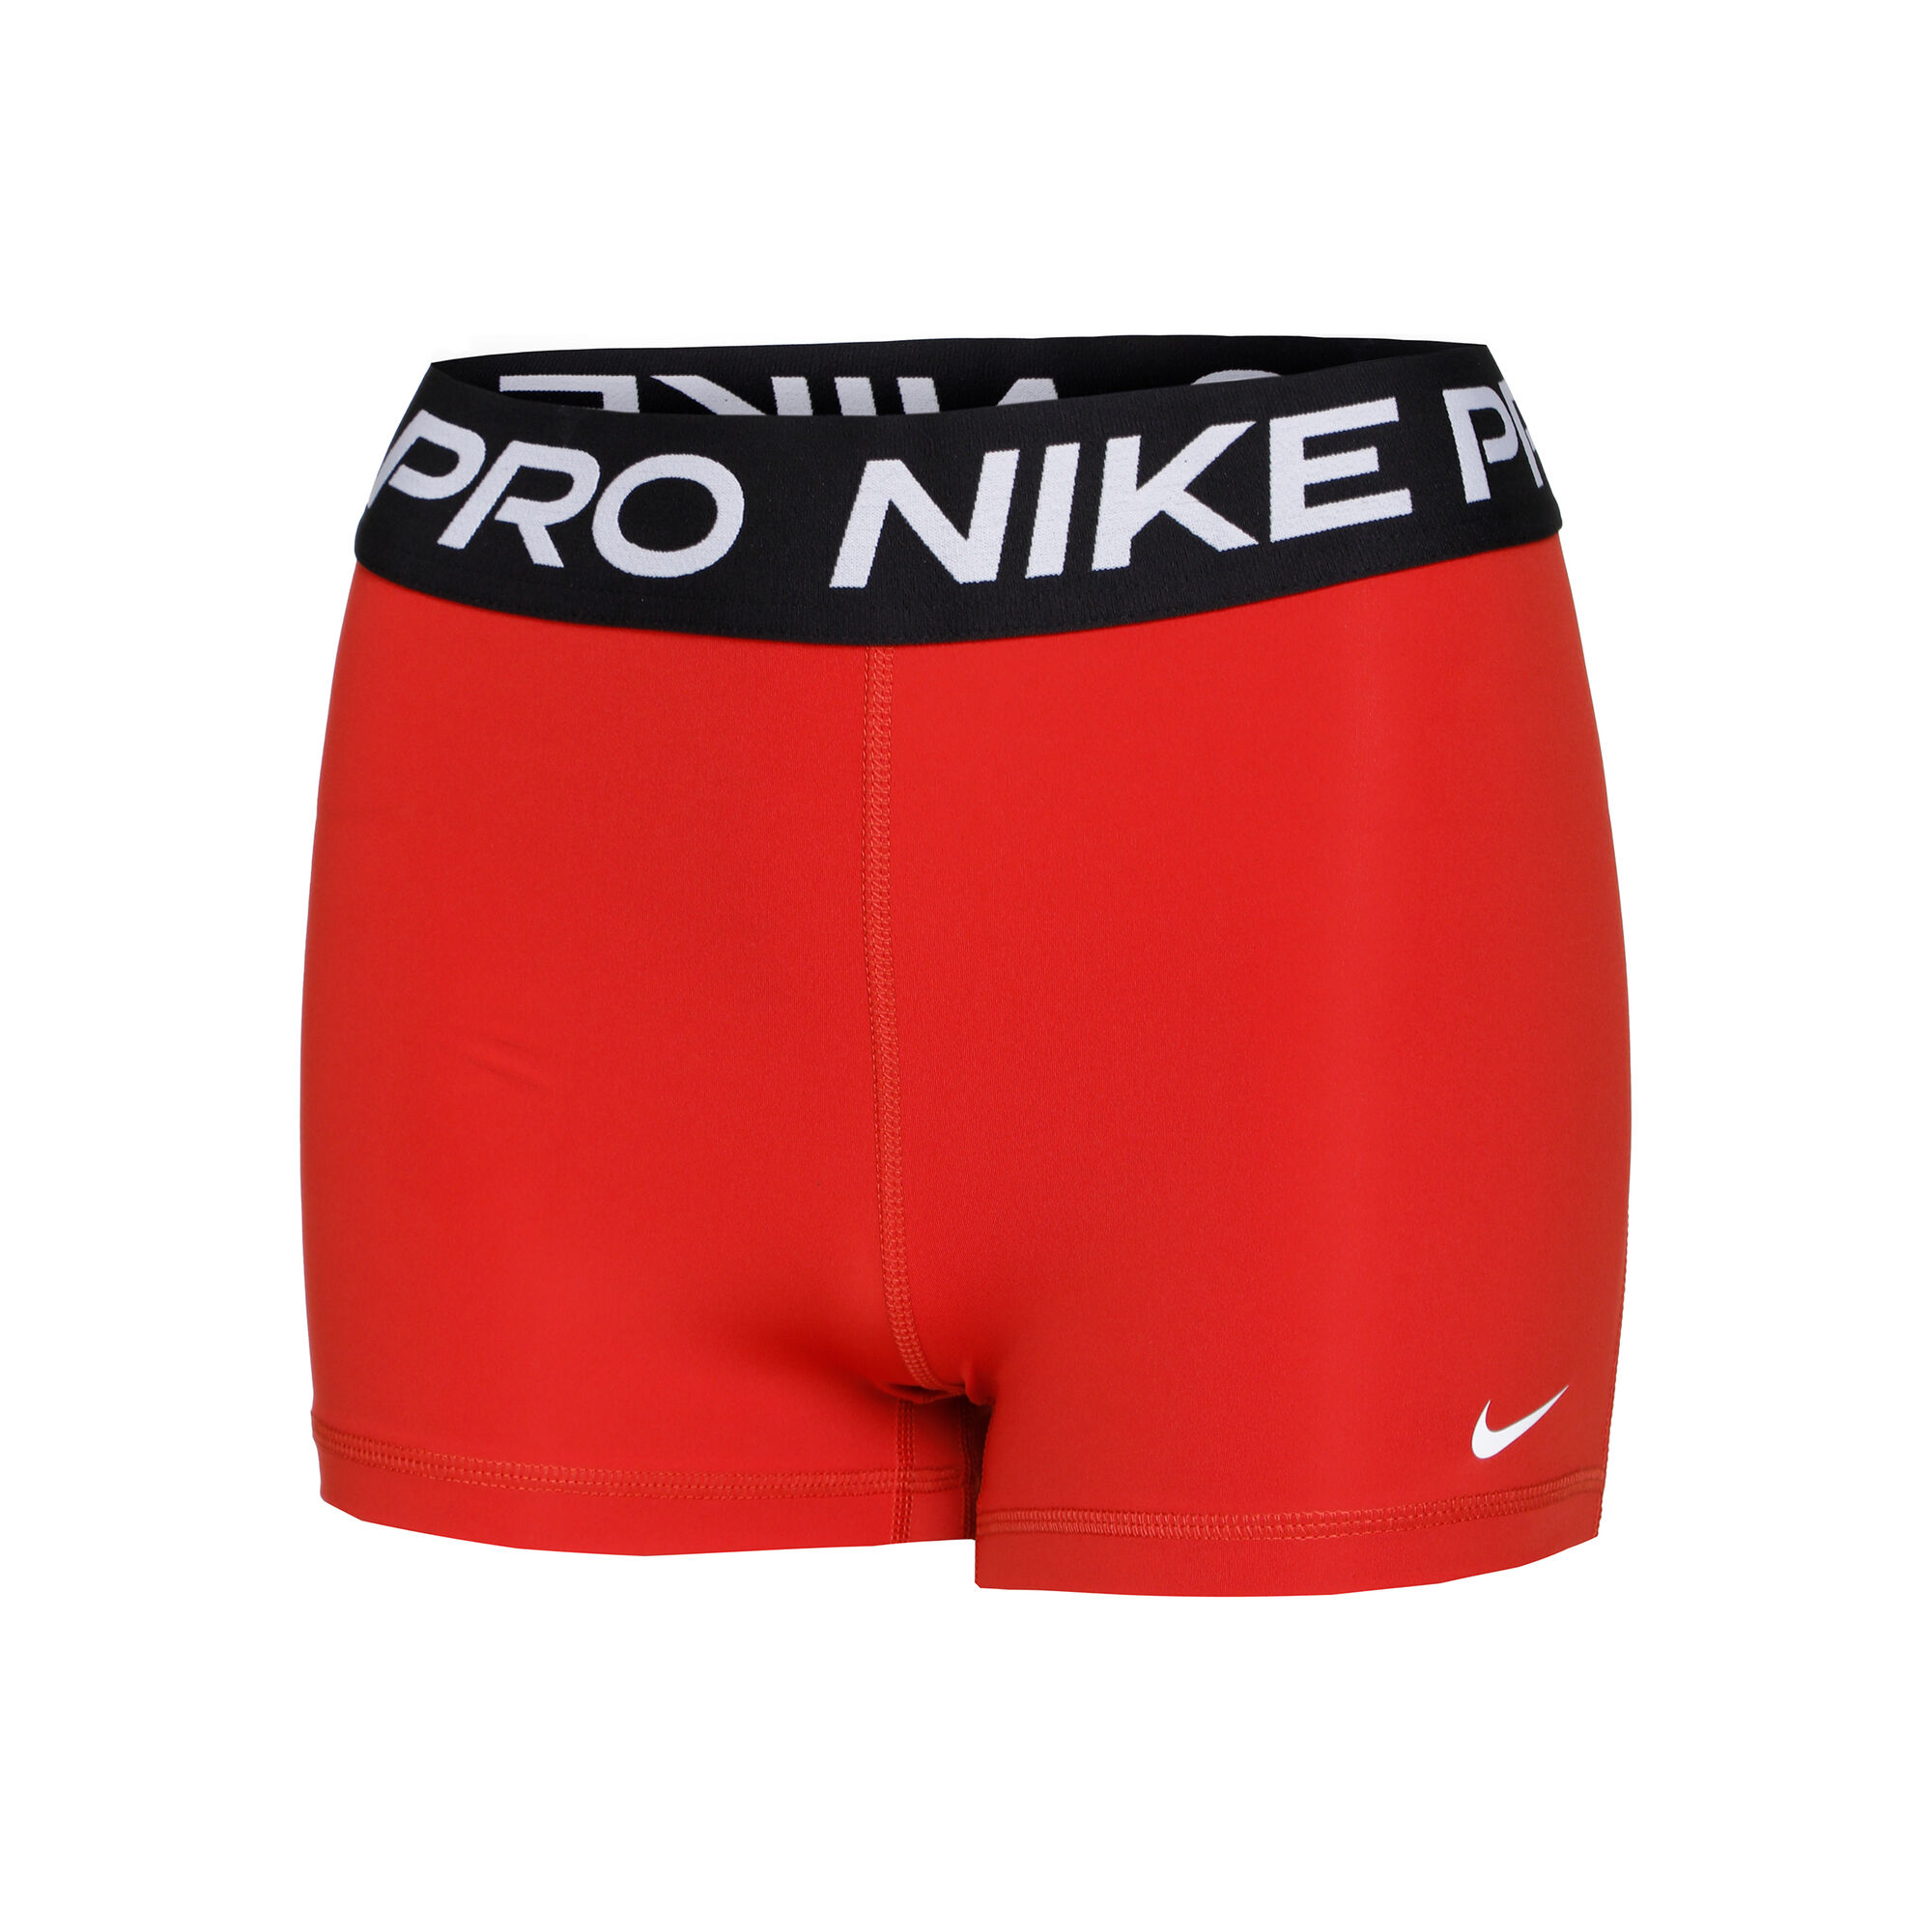 Nike Pro Mujeres - Rojo, Negro compra online | Tennis-Point